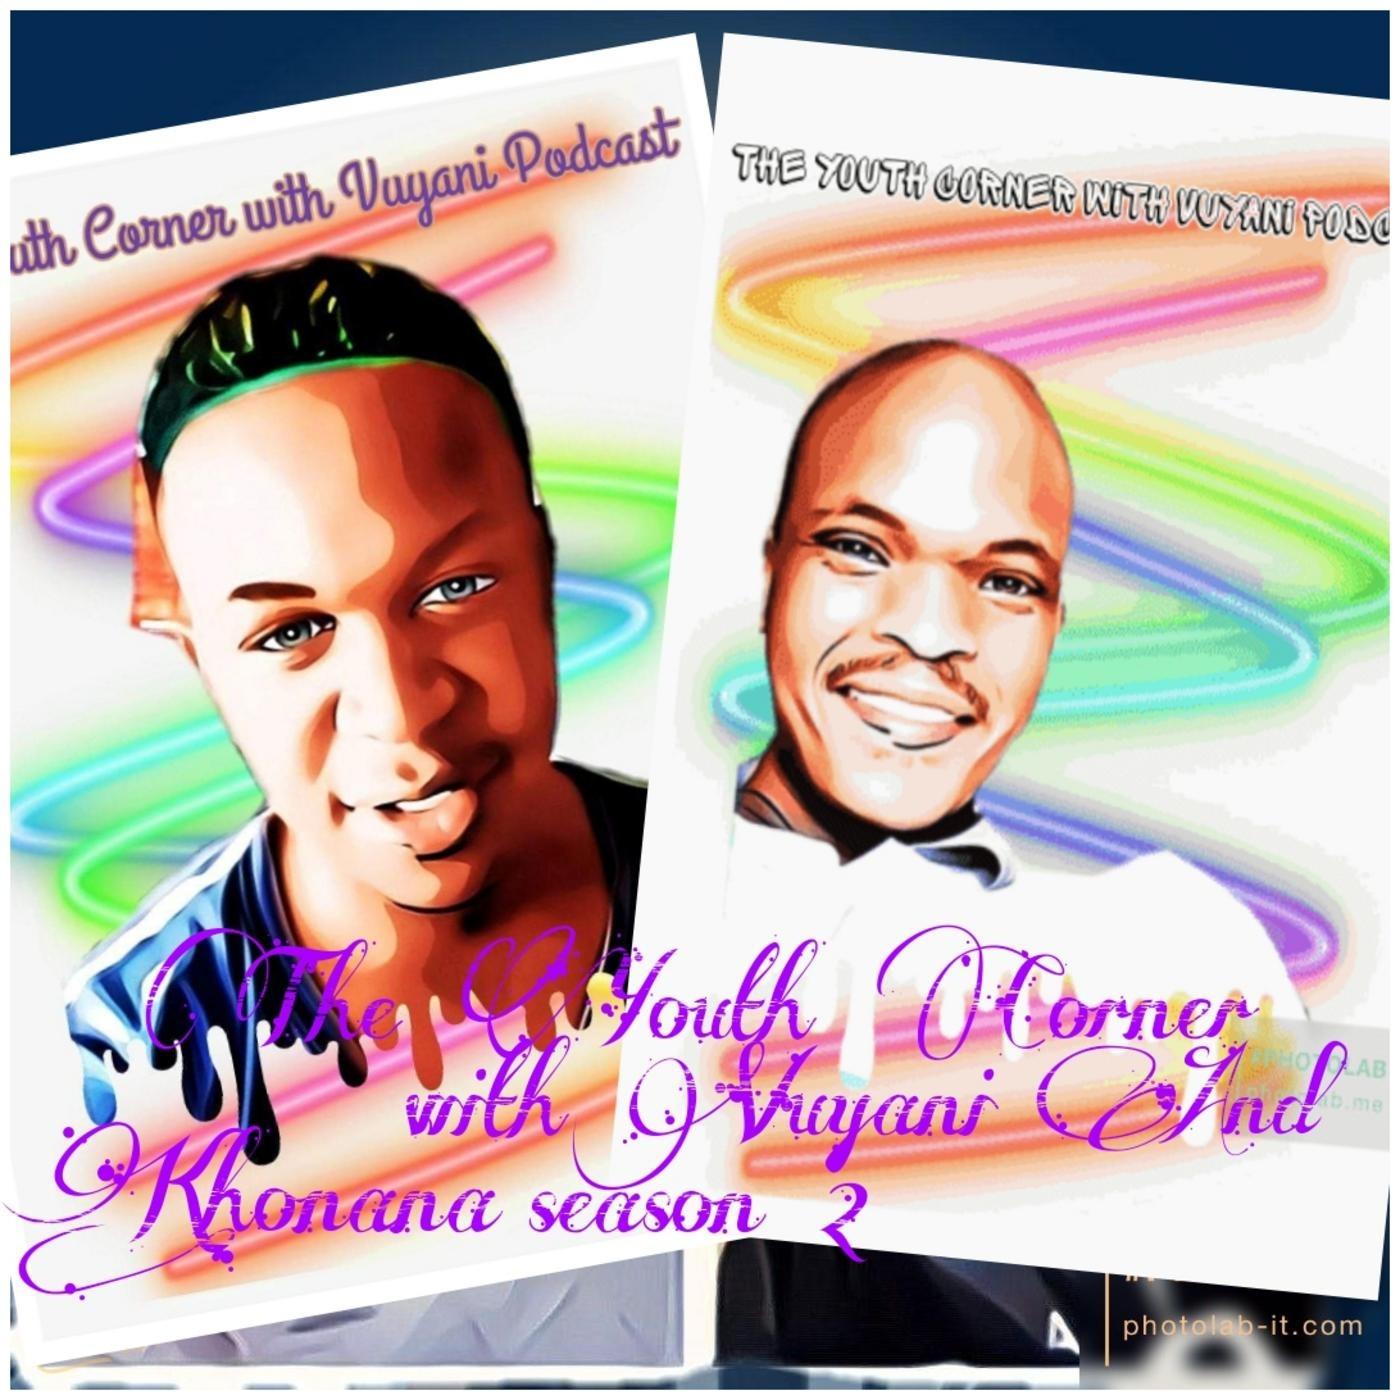 The Youth Corner with Vuyani and Khonana podcast